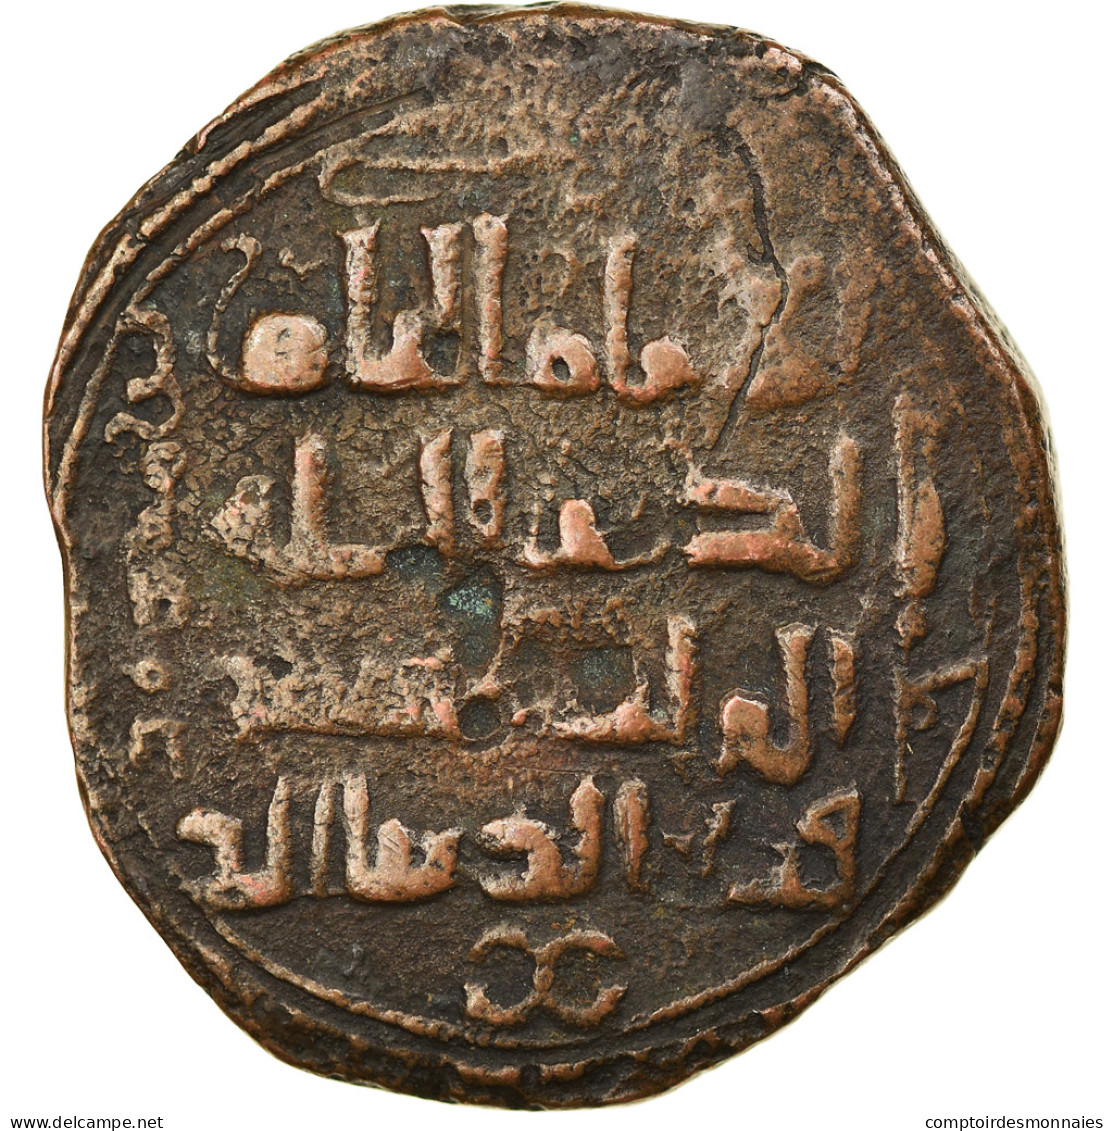 Monnaie, Zangids Of Sinjar, Qutb Al-Din Muhammad, Dirham, AH 596 (1199/1200) - Islámicas